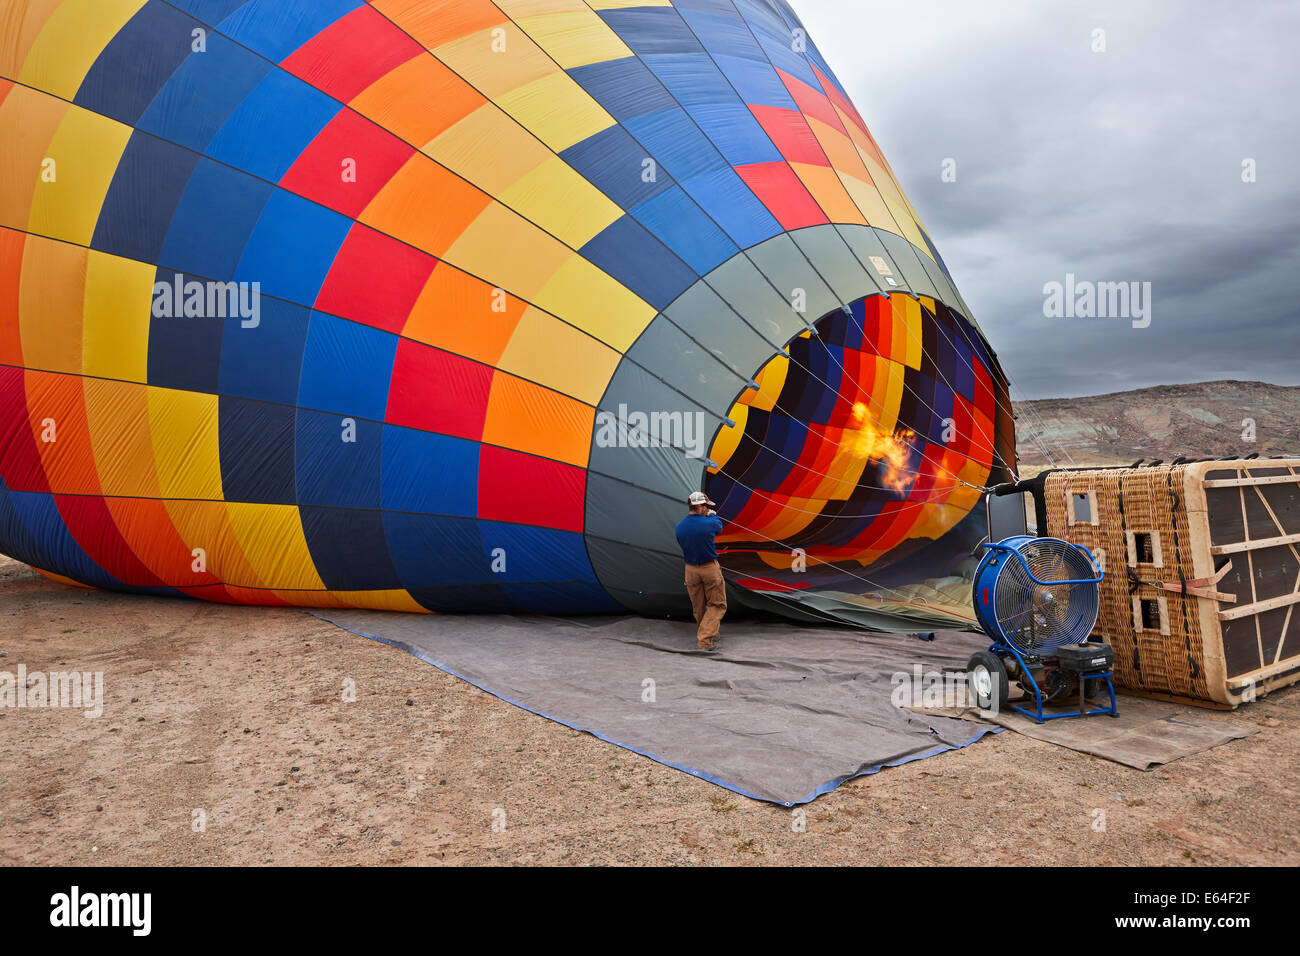 Man inflates hot air balloon for a flight. Moab, Utah, USA. Stock Photo